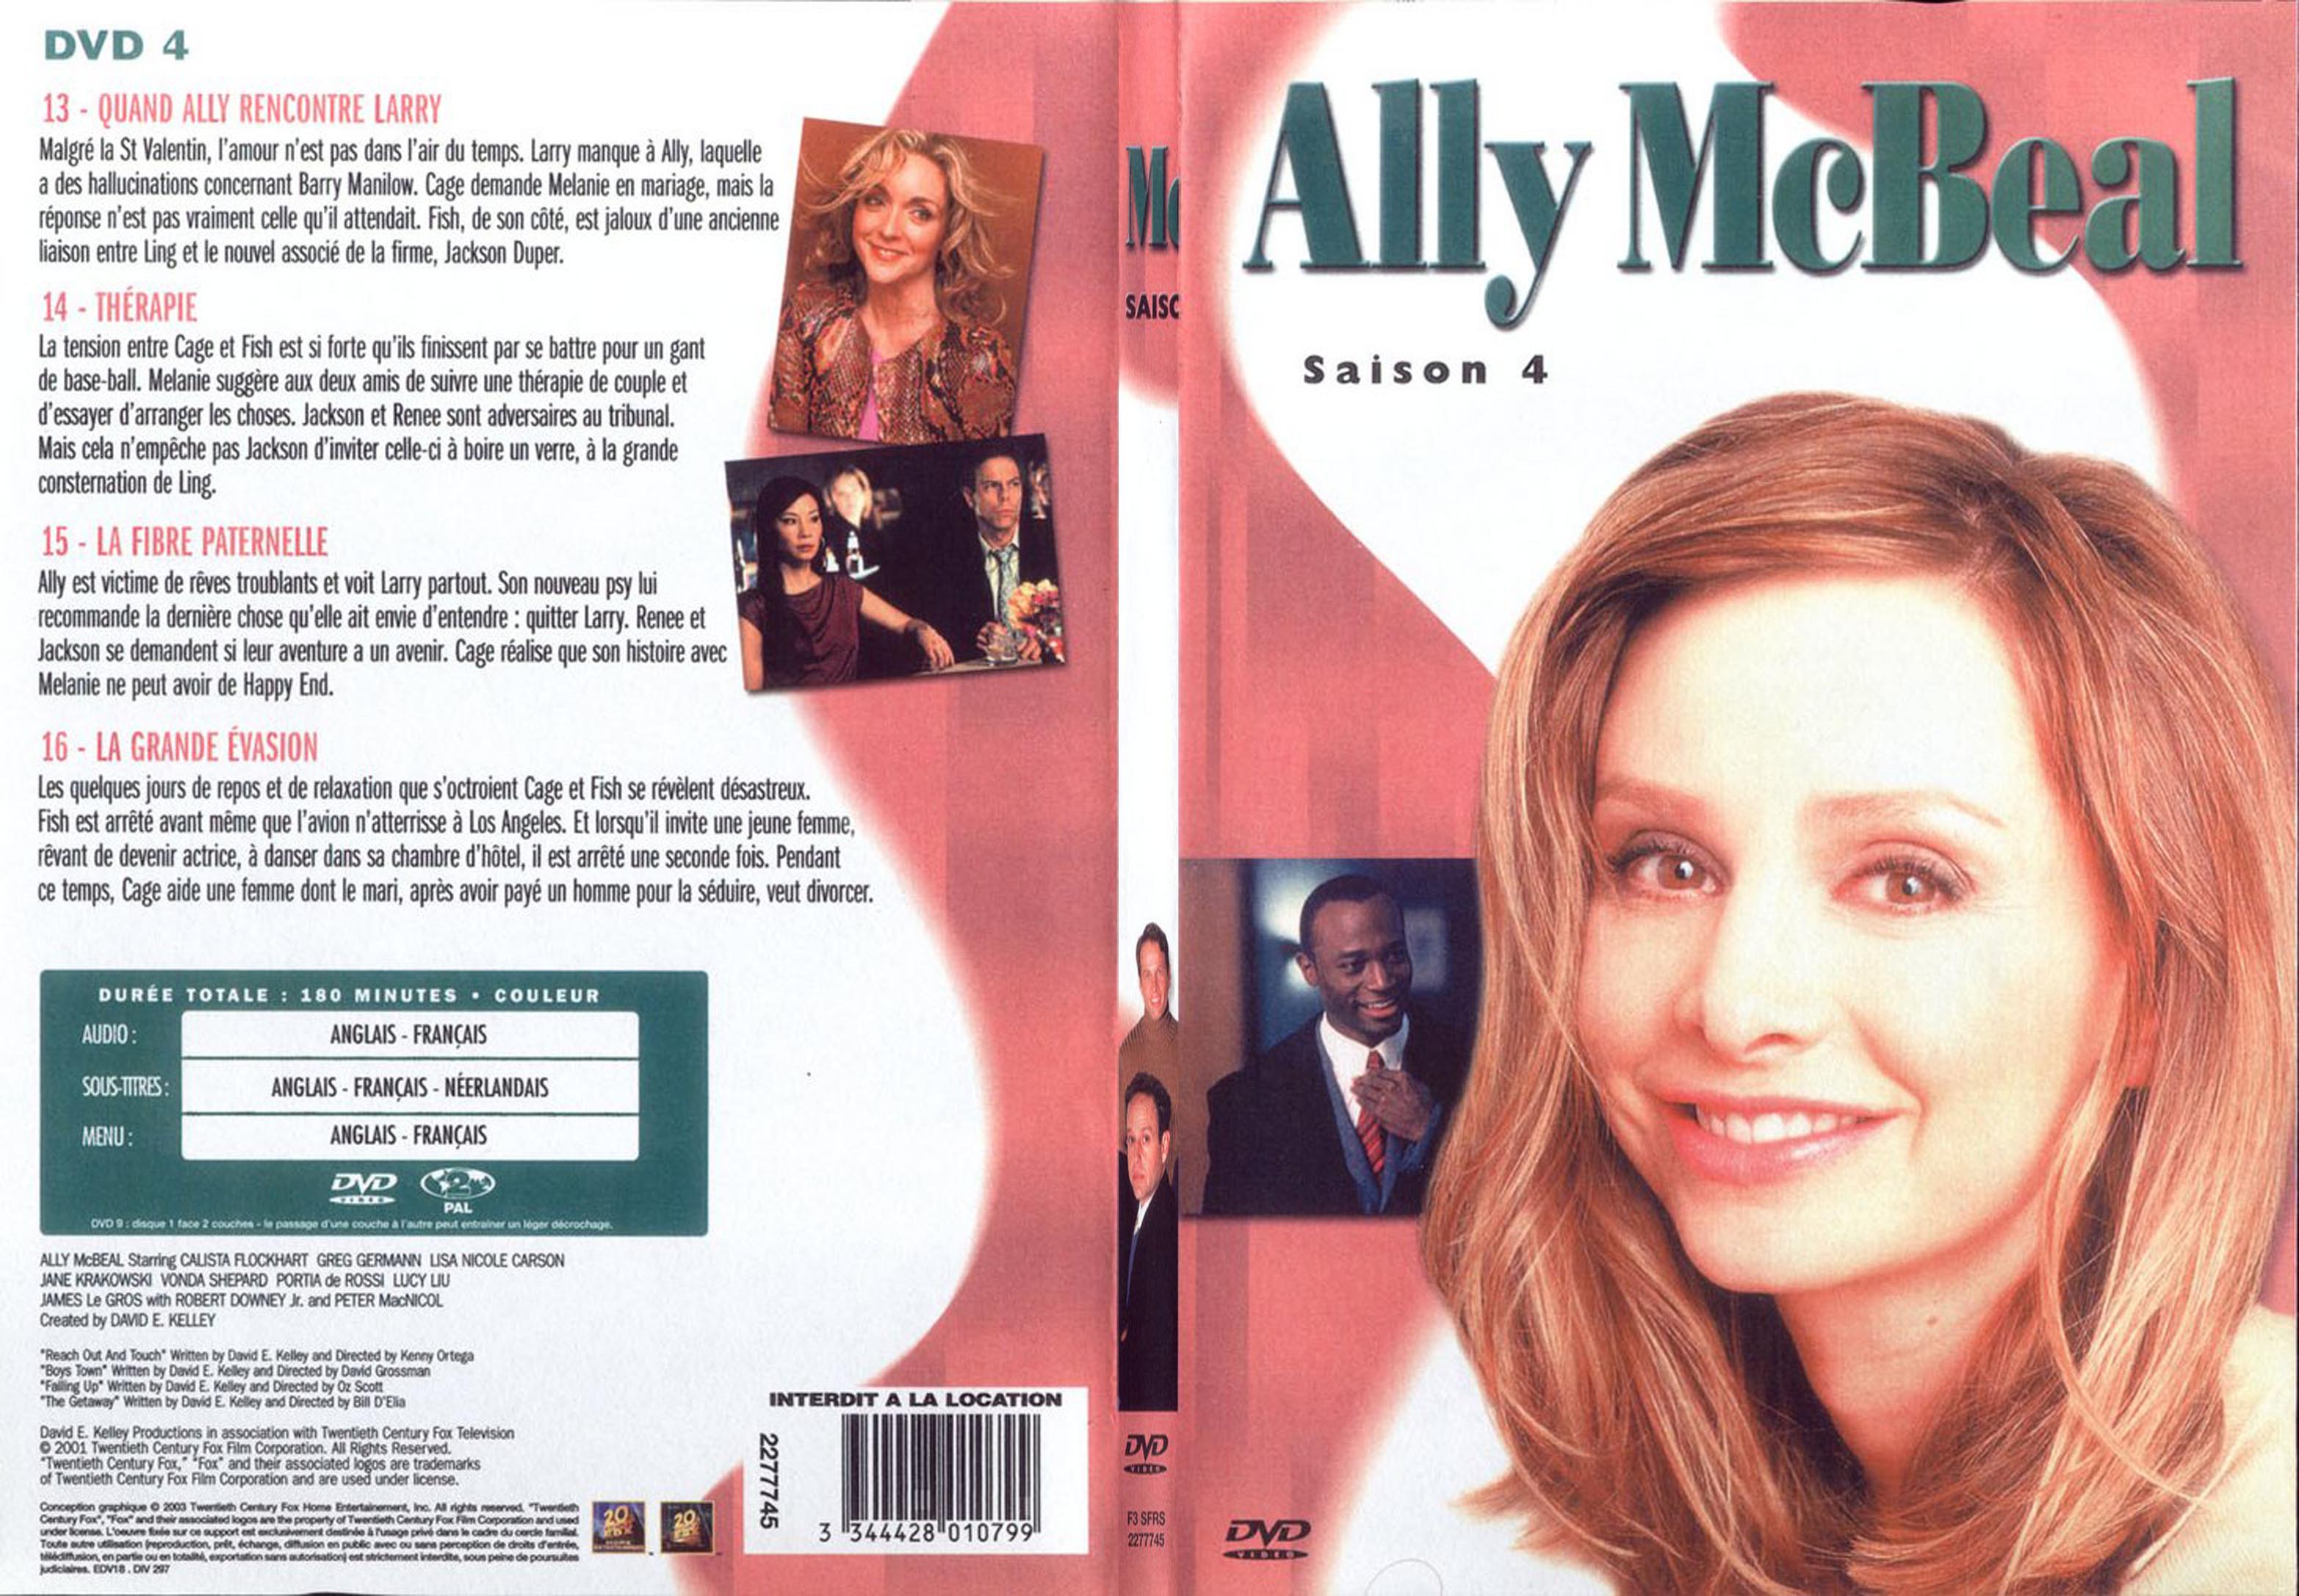 Jaquette DVD Ally McBeal saison 4 dvd 4 - SLIM